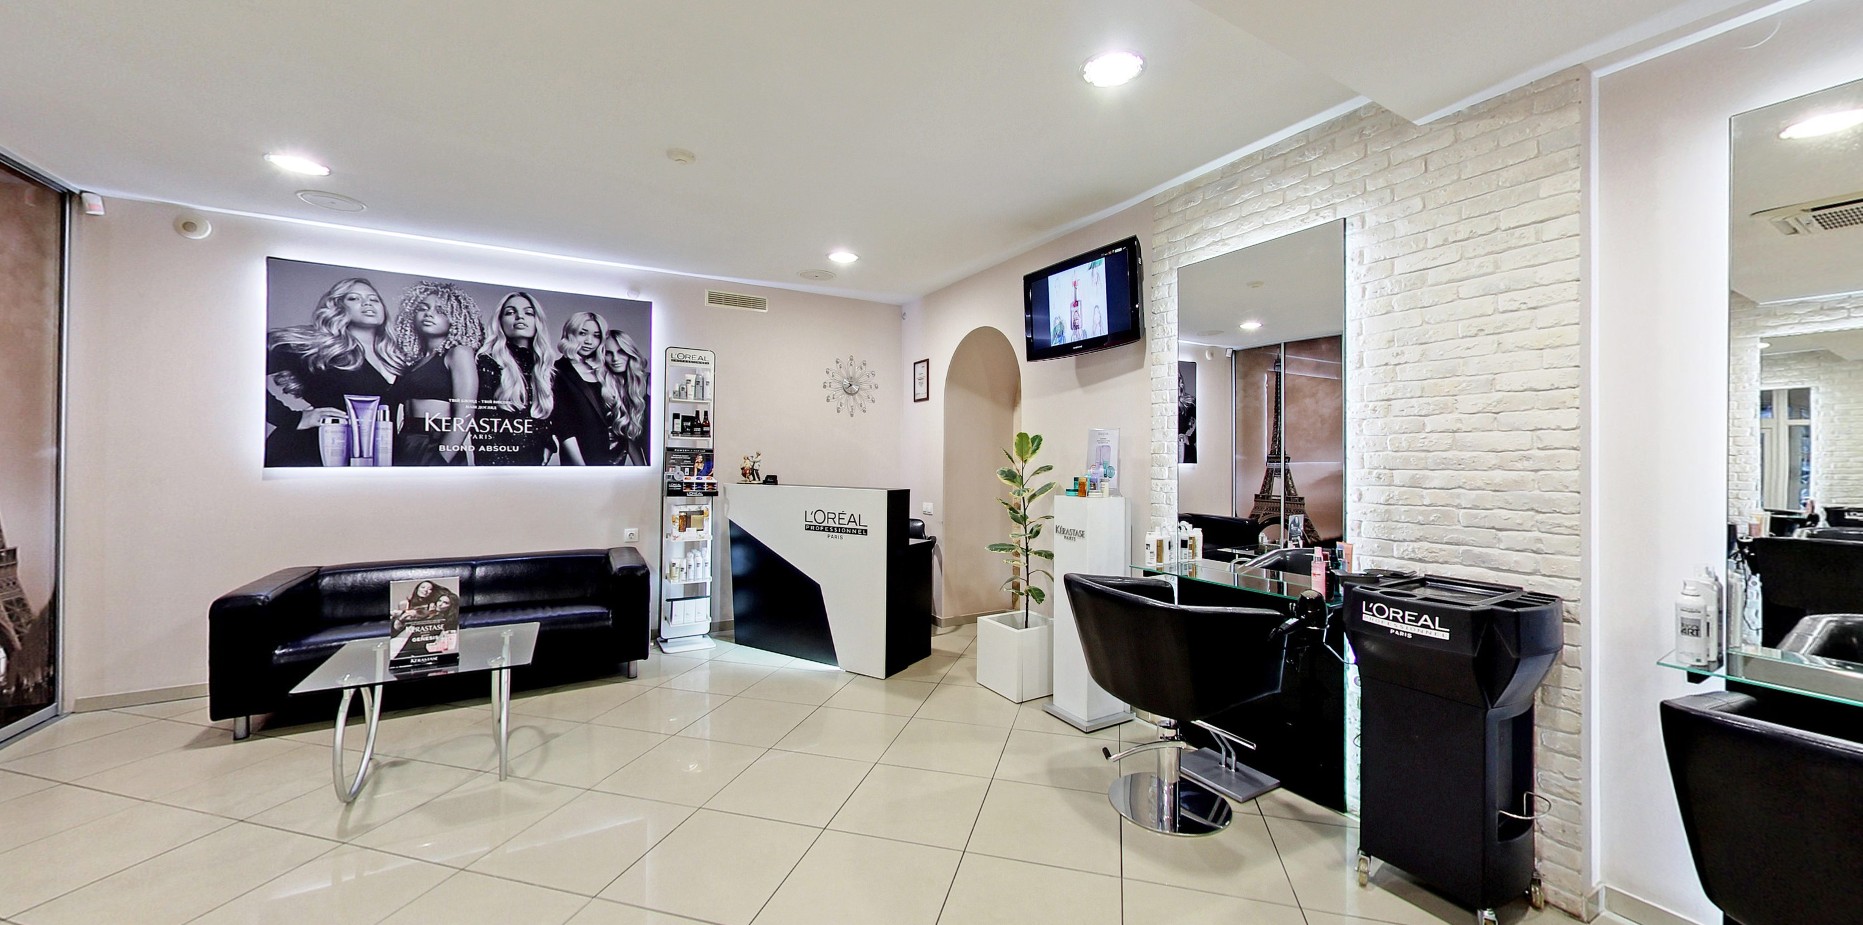 LEtoile beauty salon